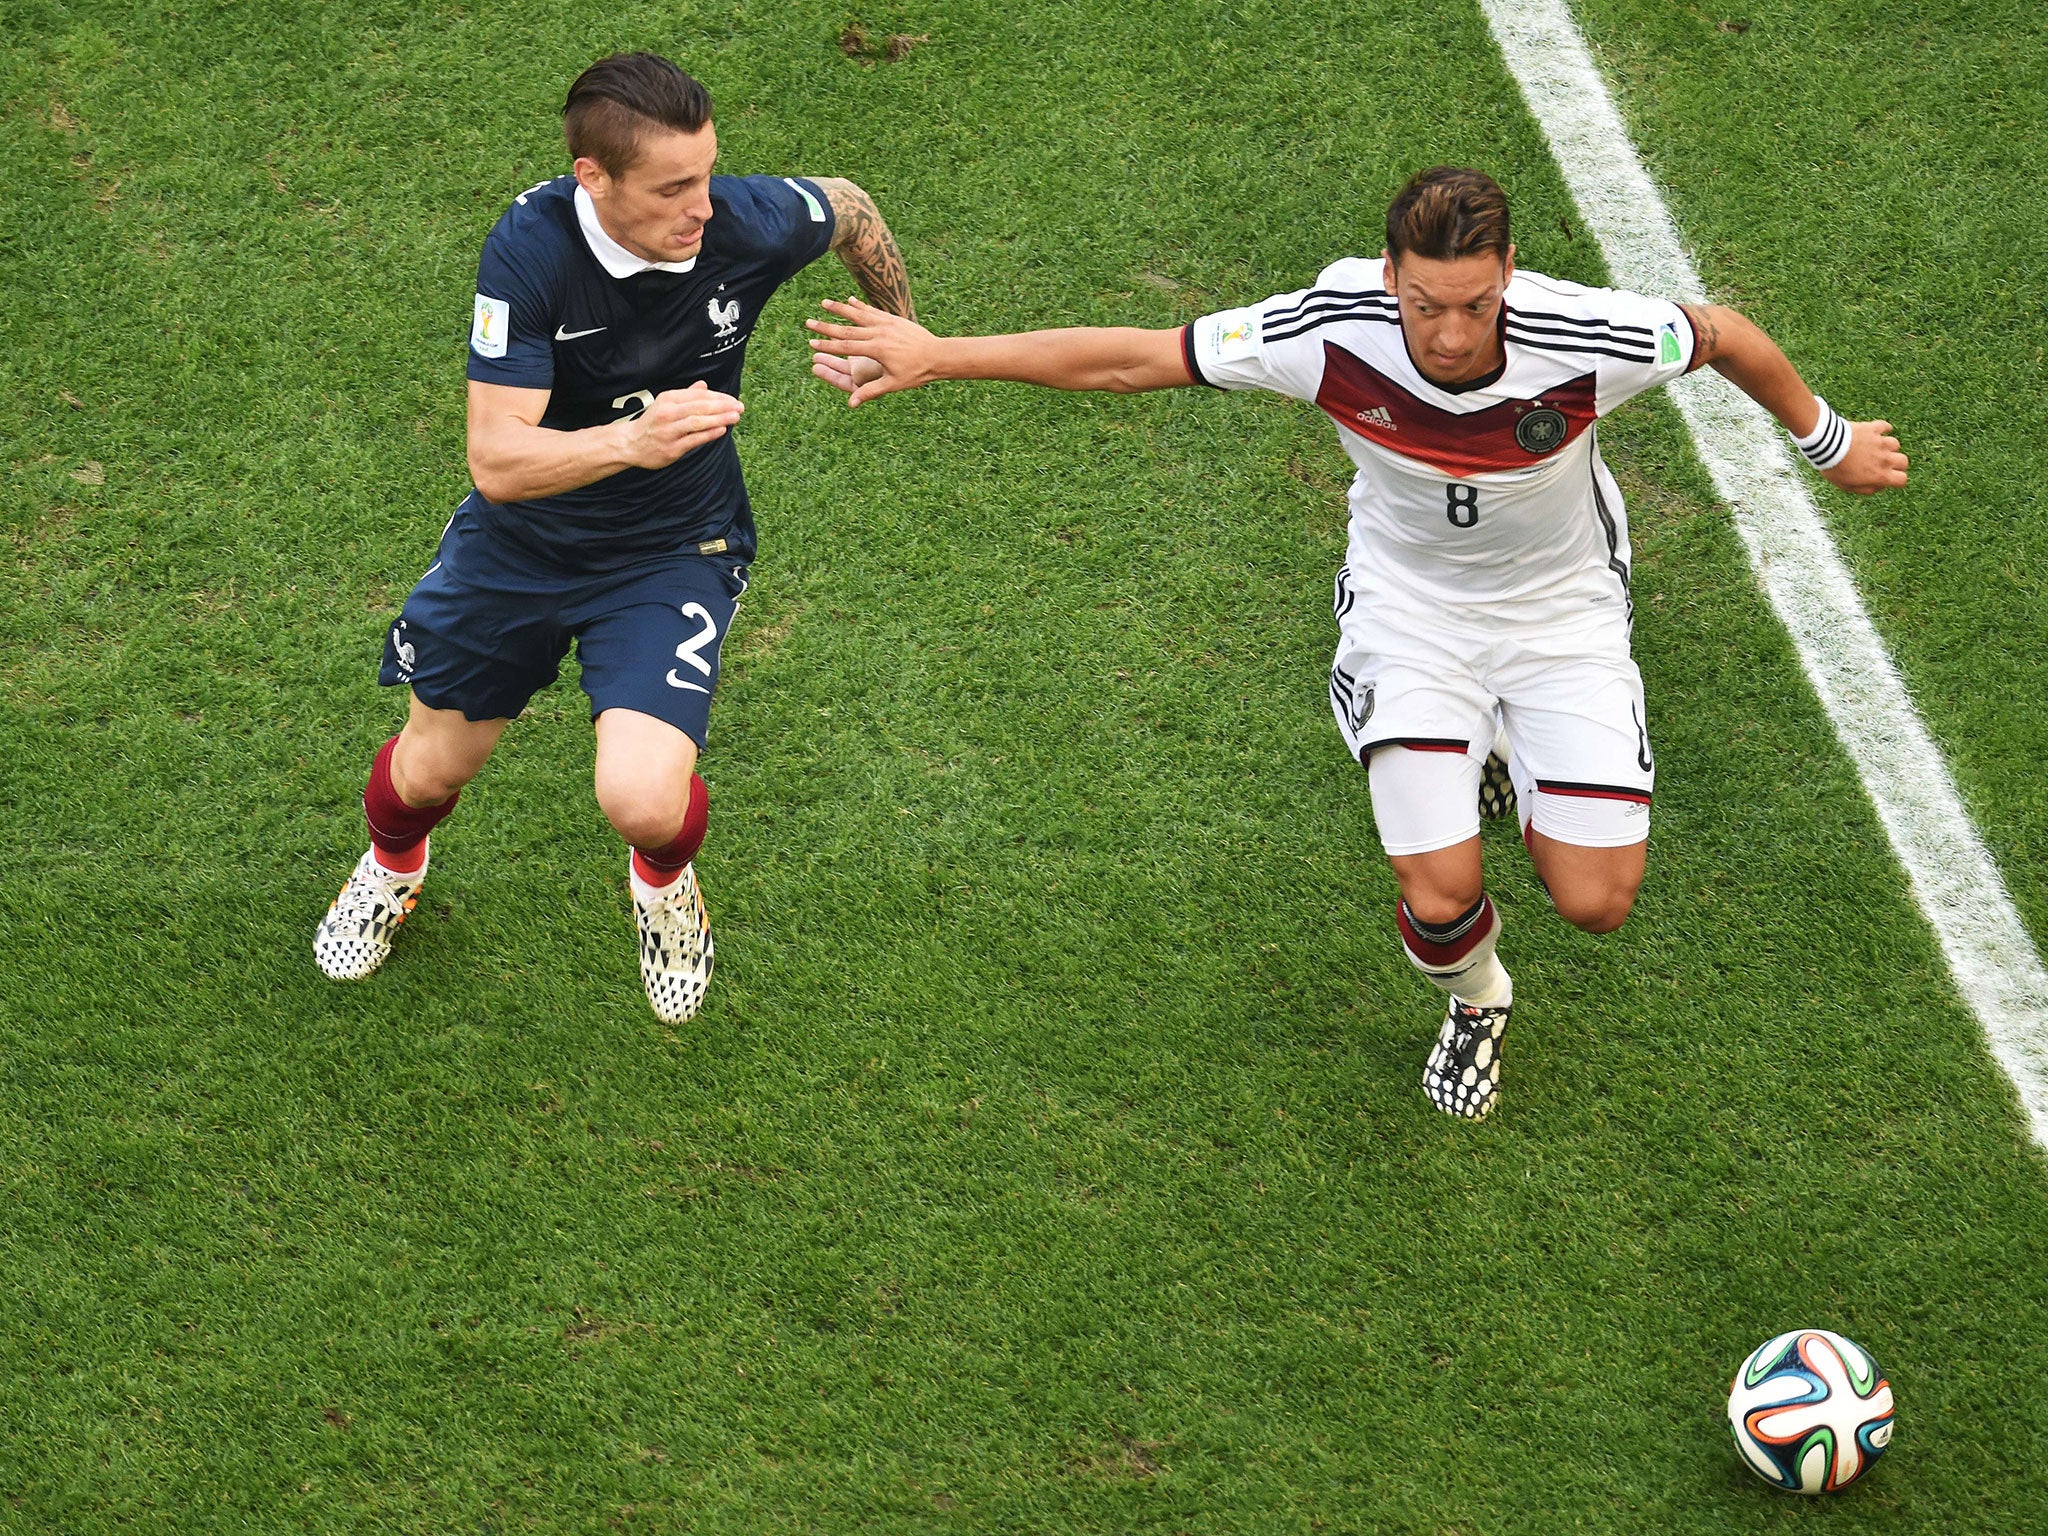 France's defender Mathieu Debuchy (L) tackles Germany's midfielder Mesut Ozil